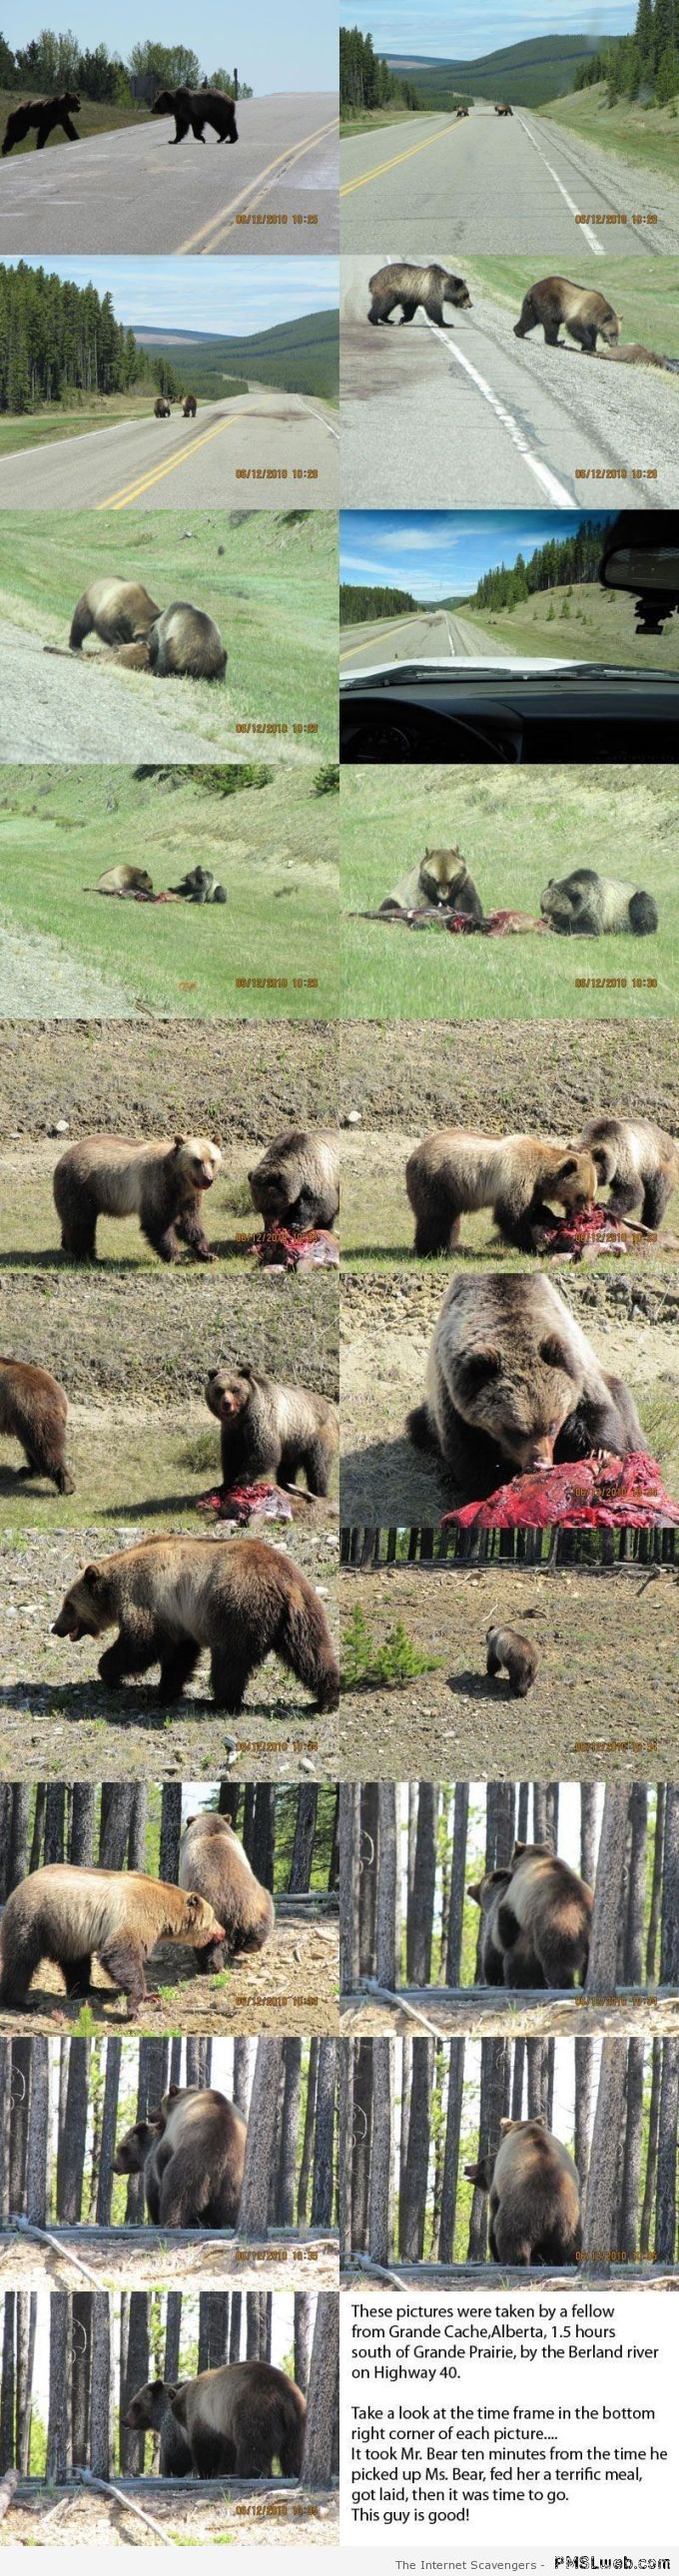 Funny bear picks up girl at PMSLweb.com